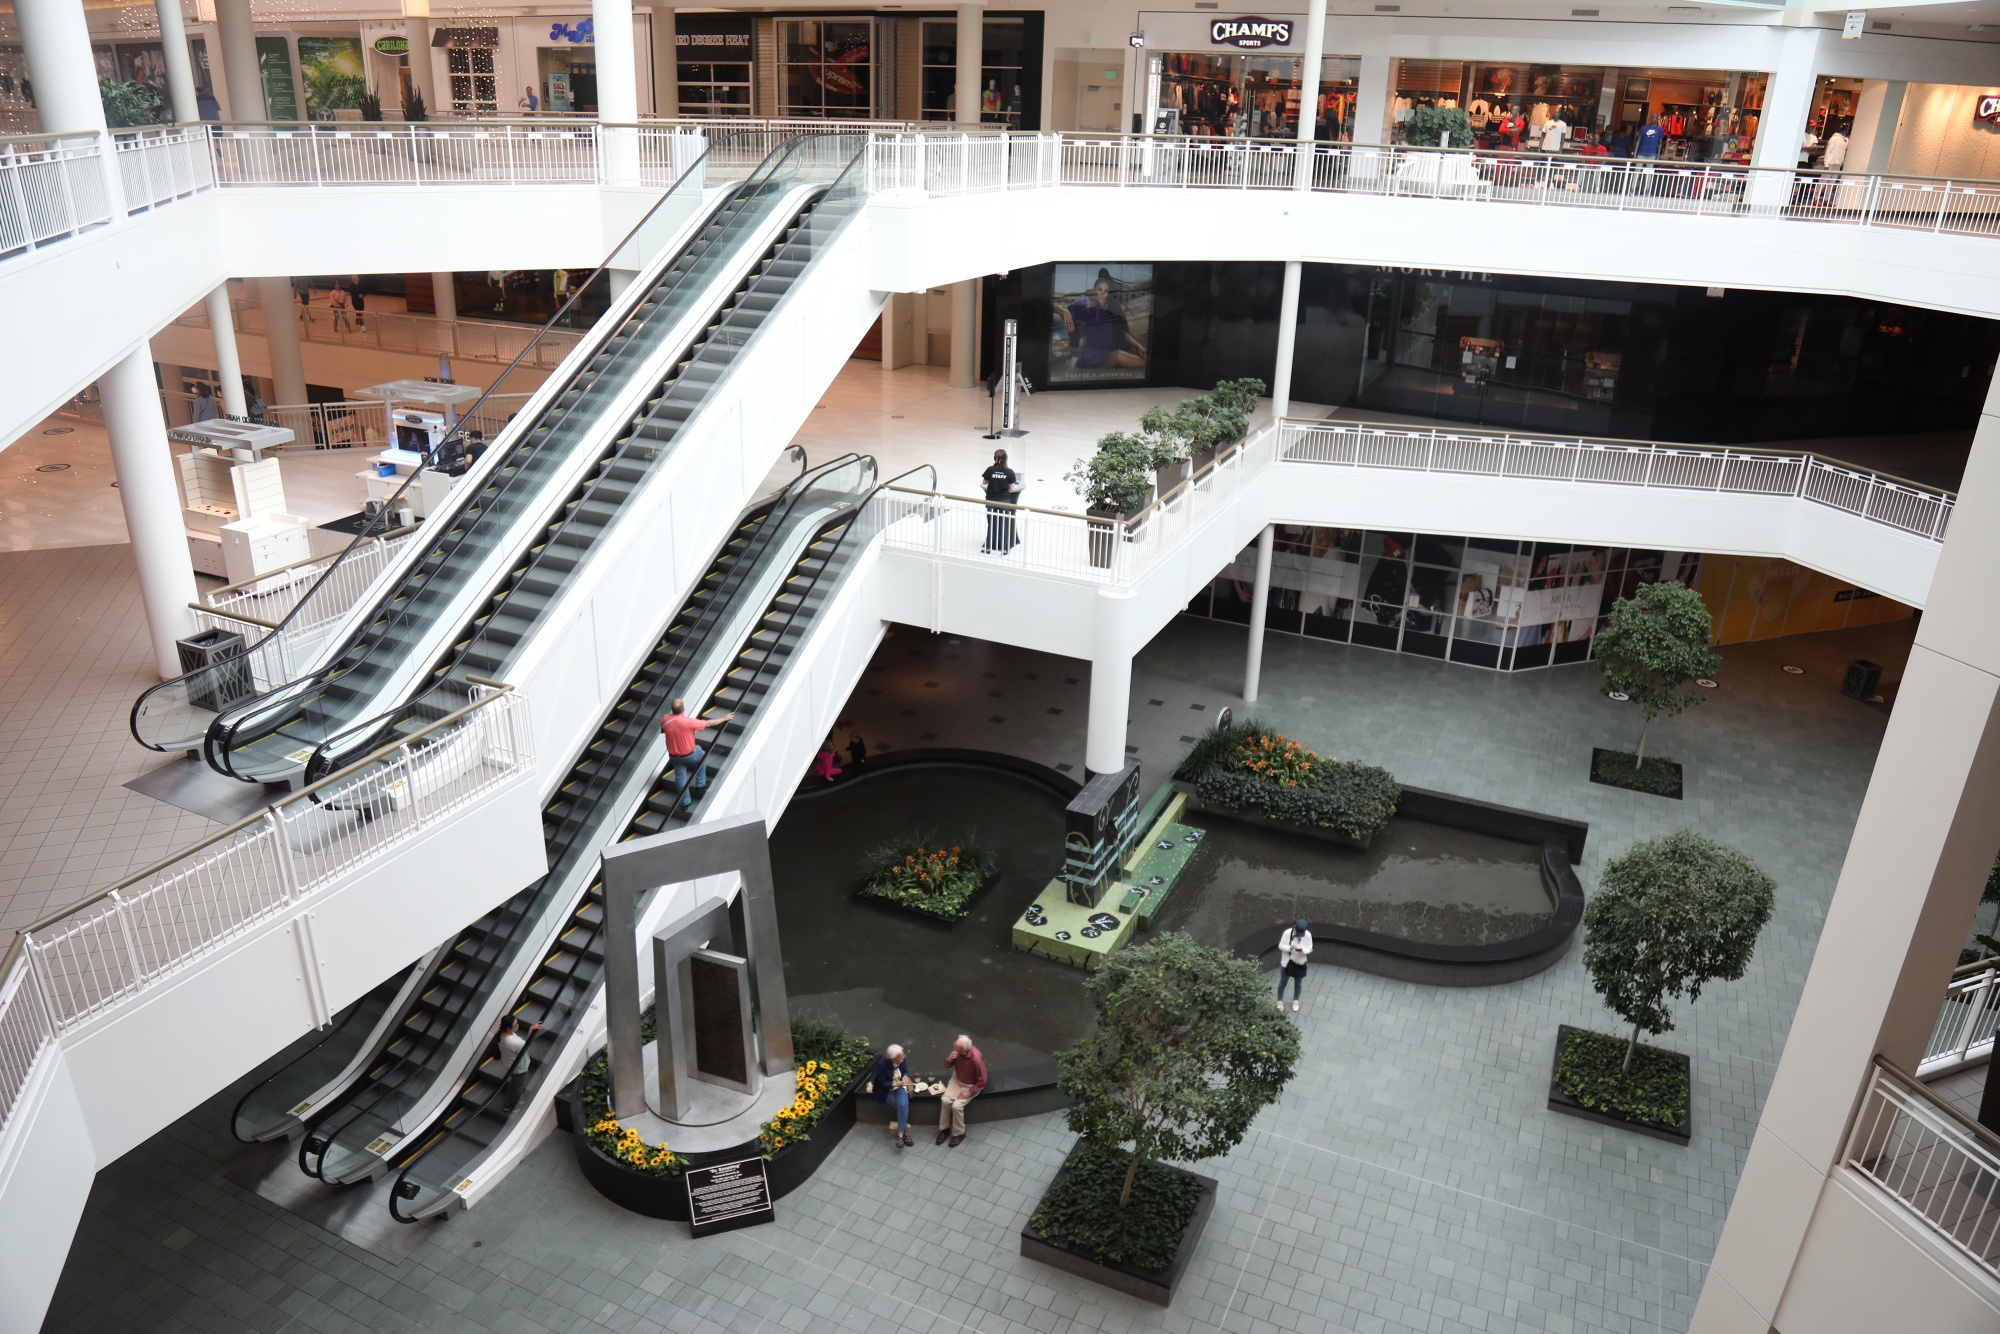 Ambitious, $5 billion American Dream mall brings outside